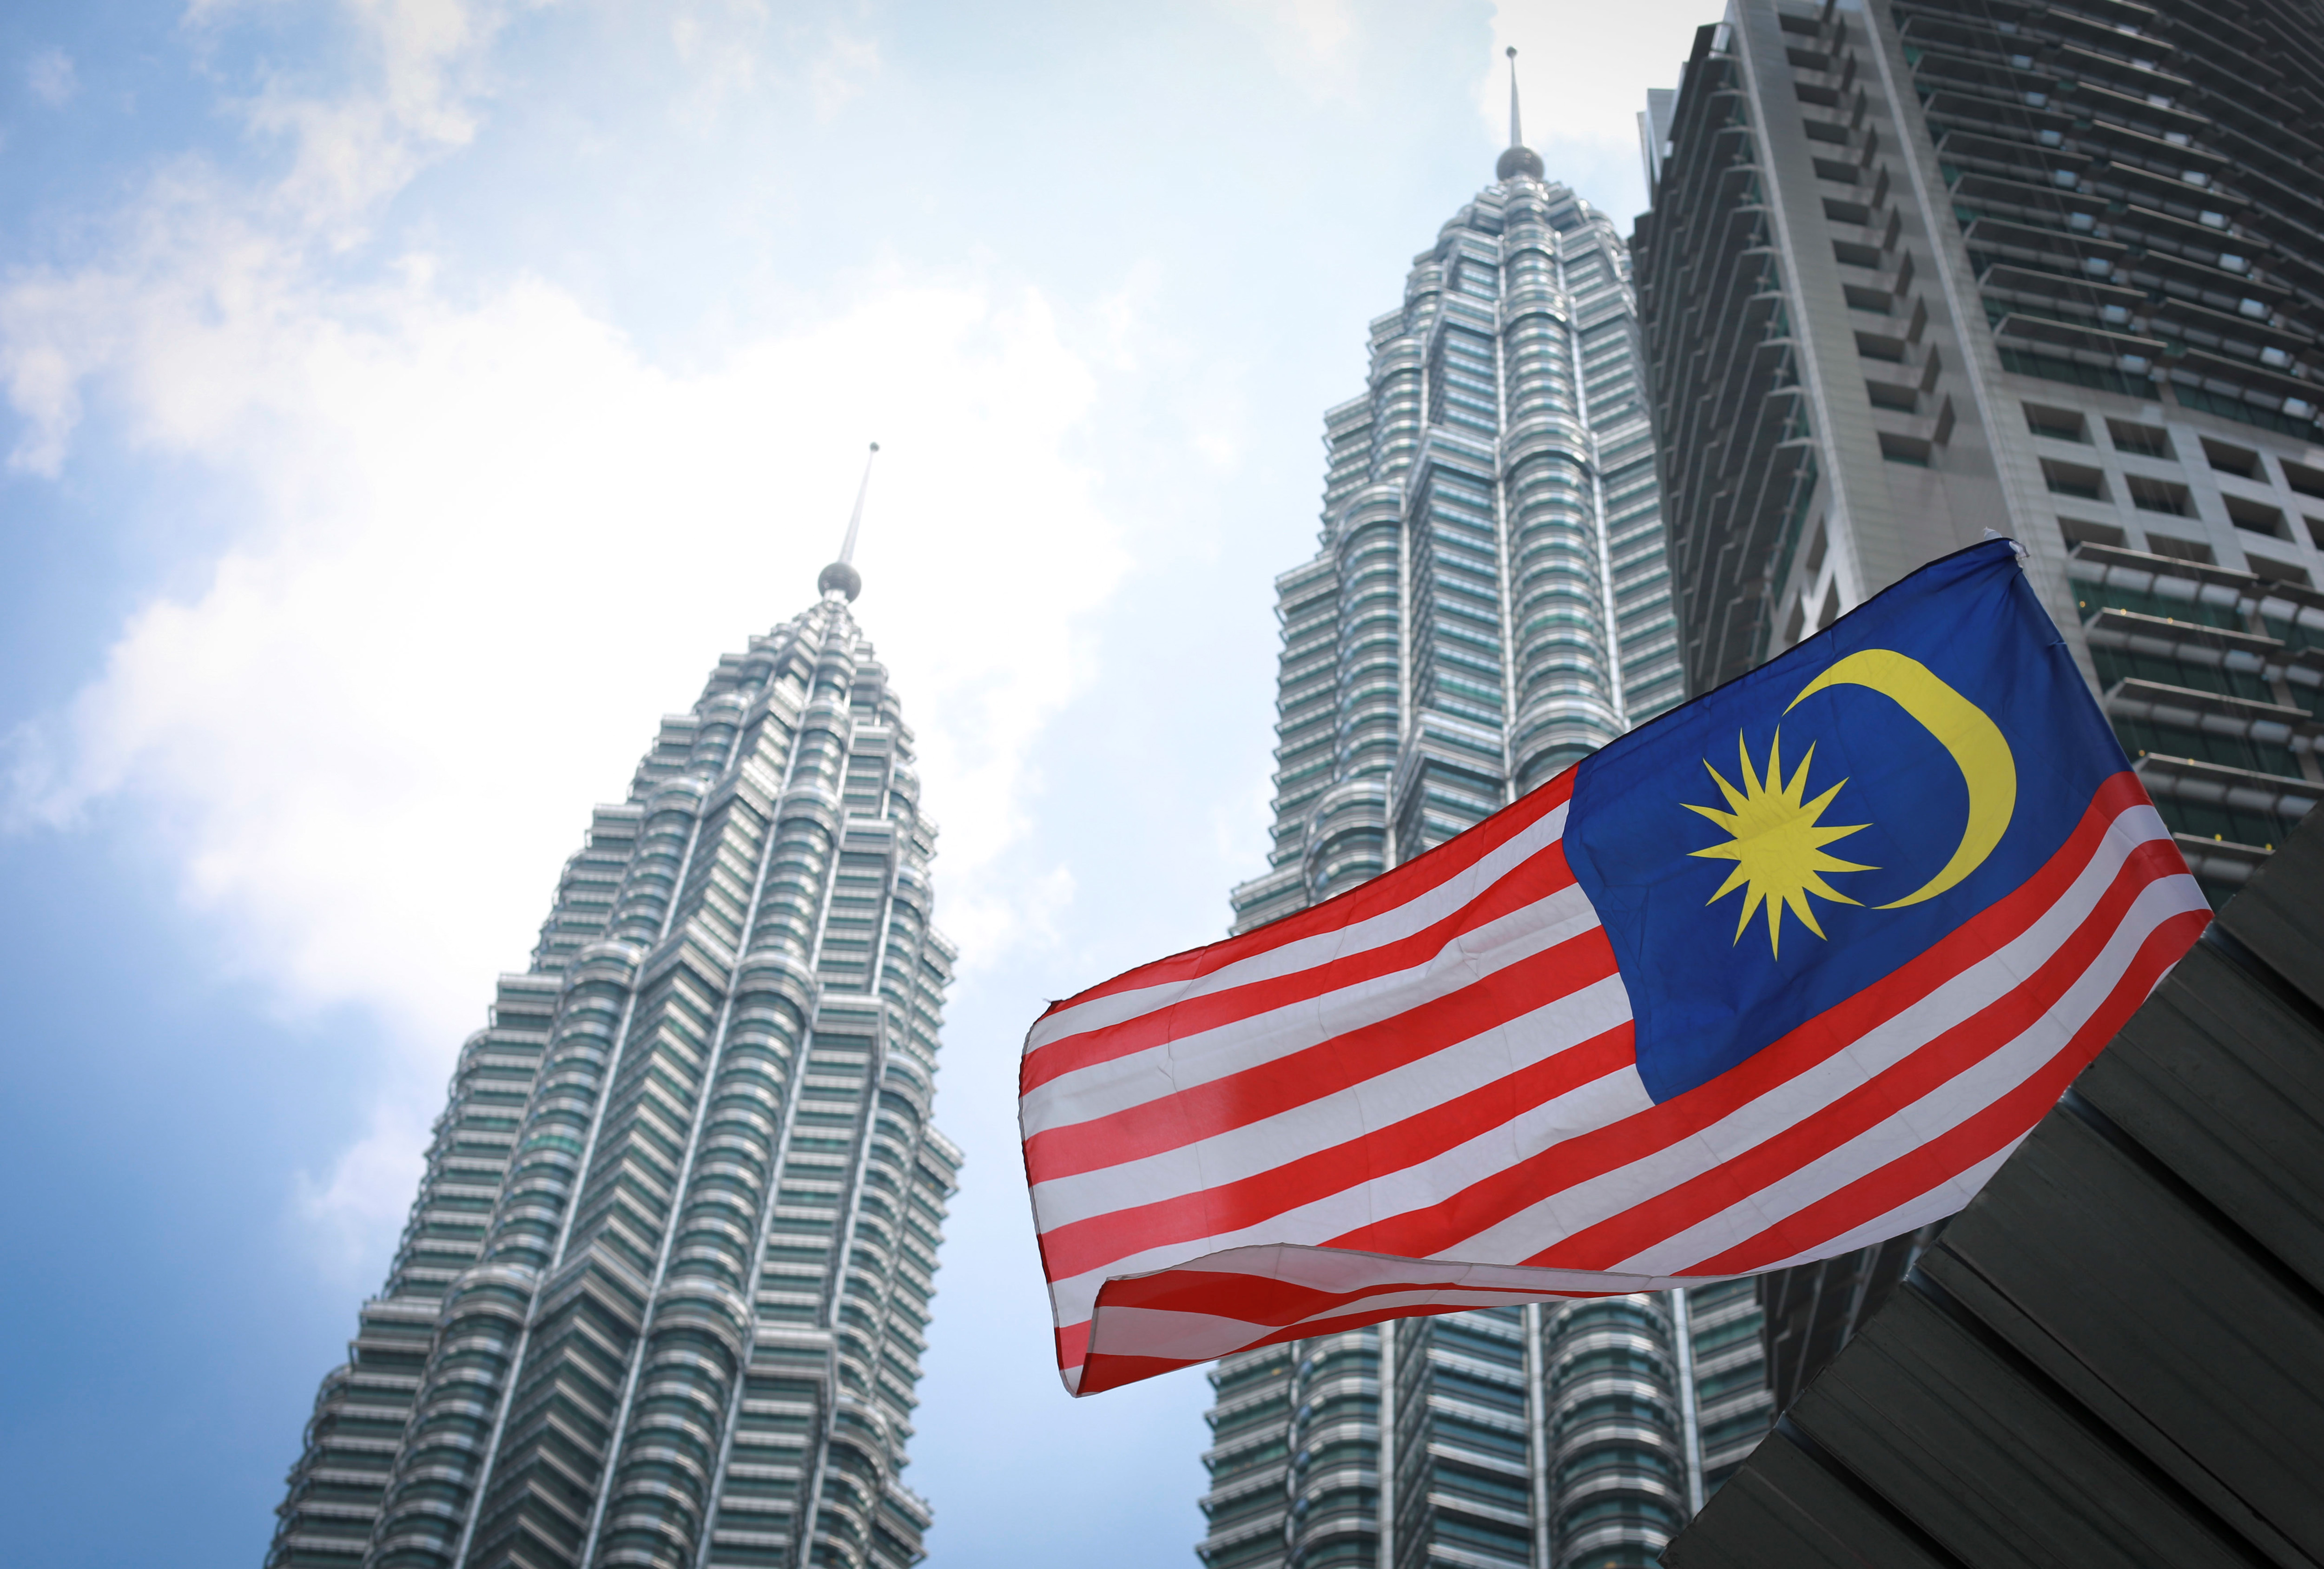 Malaysia's national flag flies in front of its landmark Petronas Twin Towers in Kuala Lumpur, Malaysia. photo: AP Photo/Vincent Thian